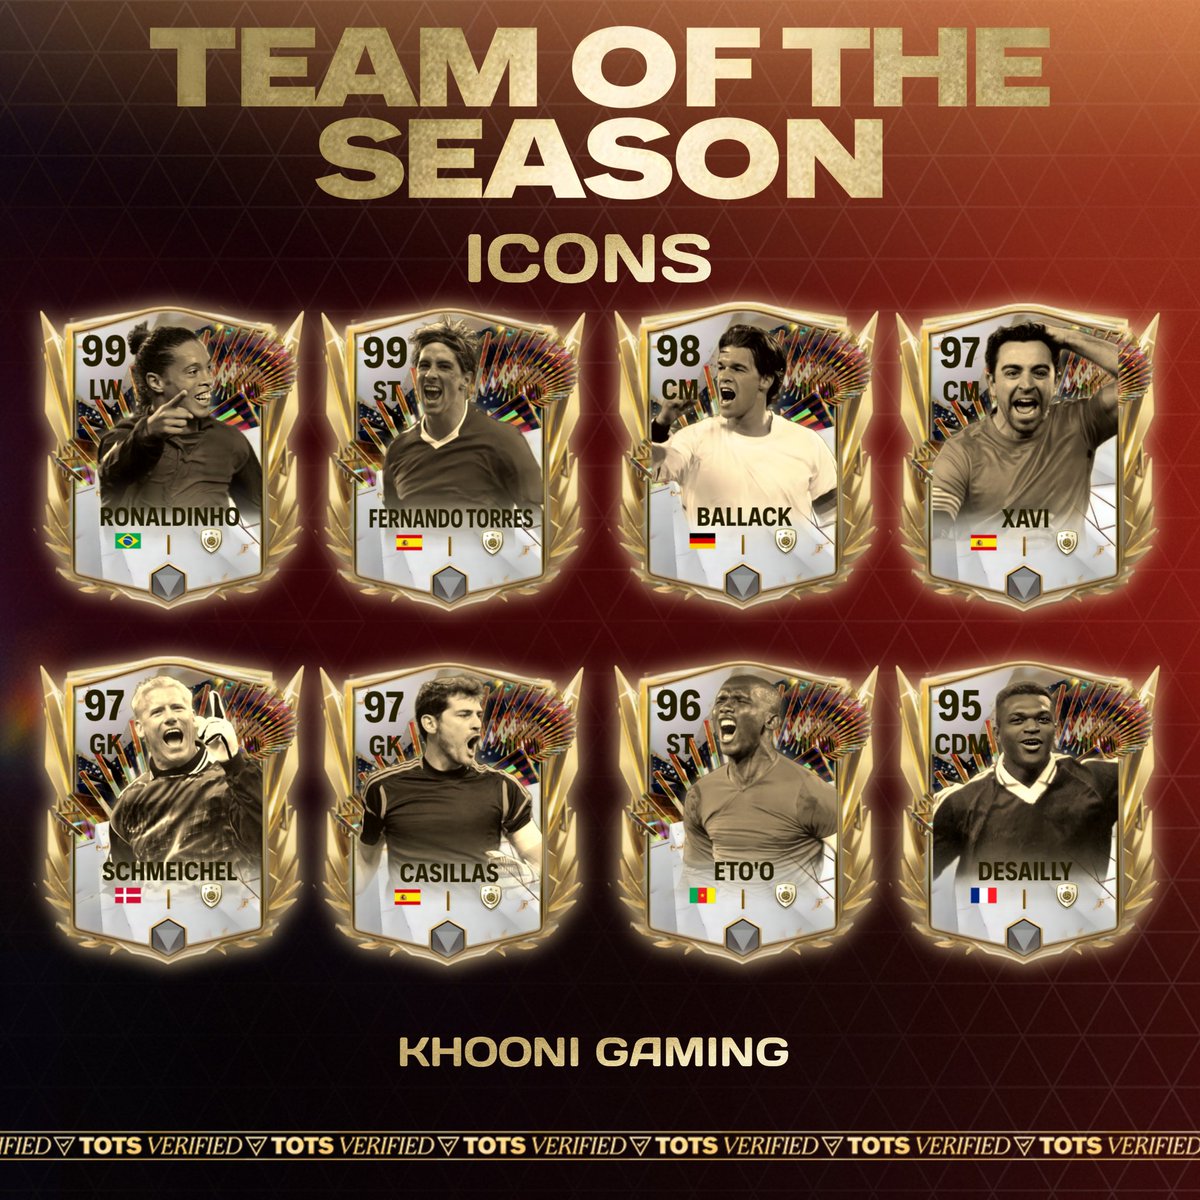 Team of the Season Icons Consept 🍀 @JONALDINHOtm @JoseAlep1 @tutiofifa @PhanMinhHauFFM